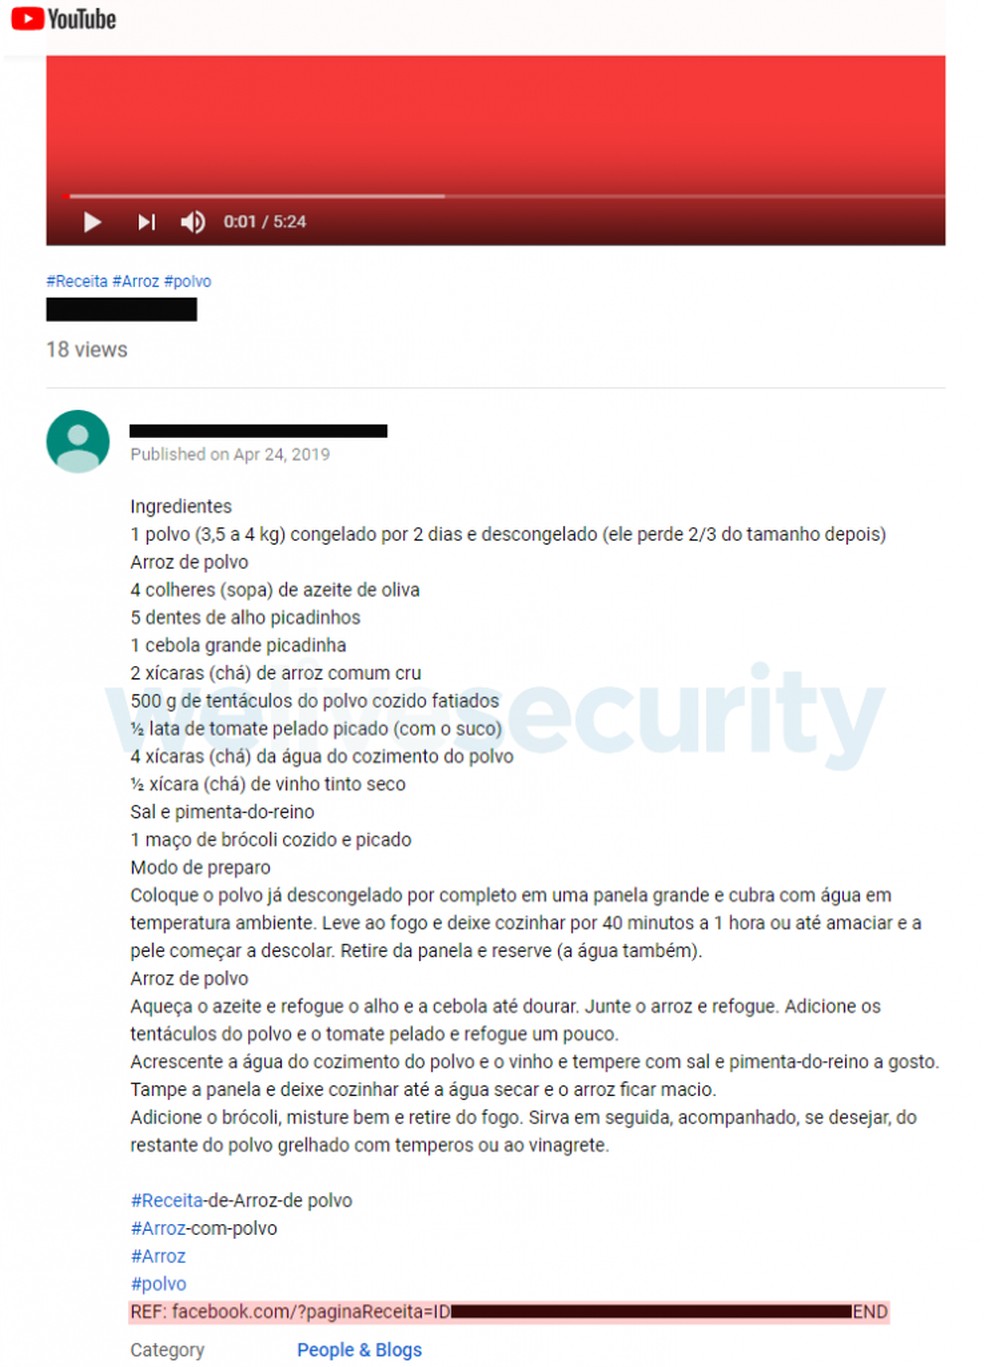 Aplicativo malicioso mira em brasileiros para roubar dados bancários